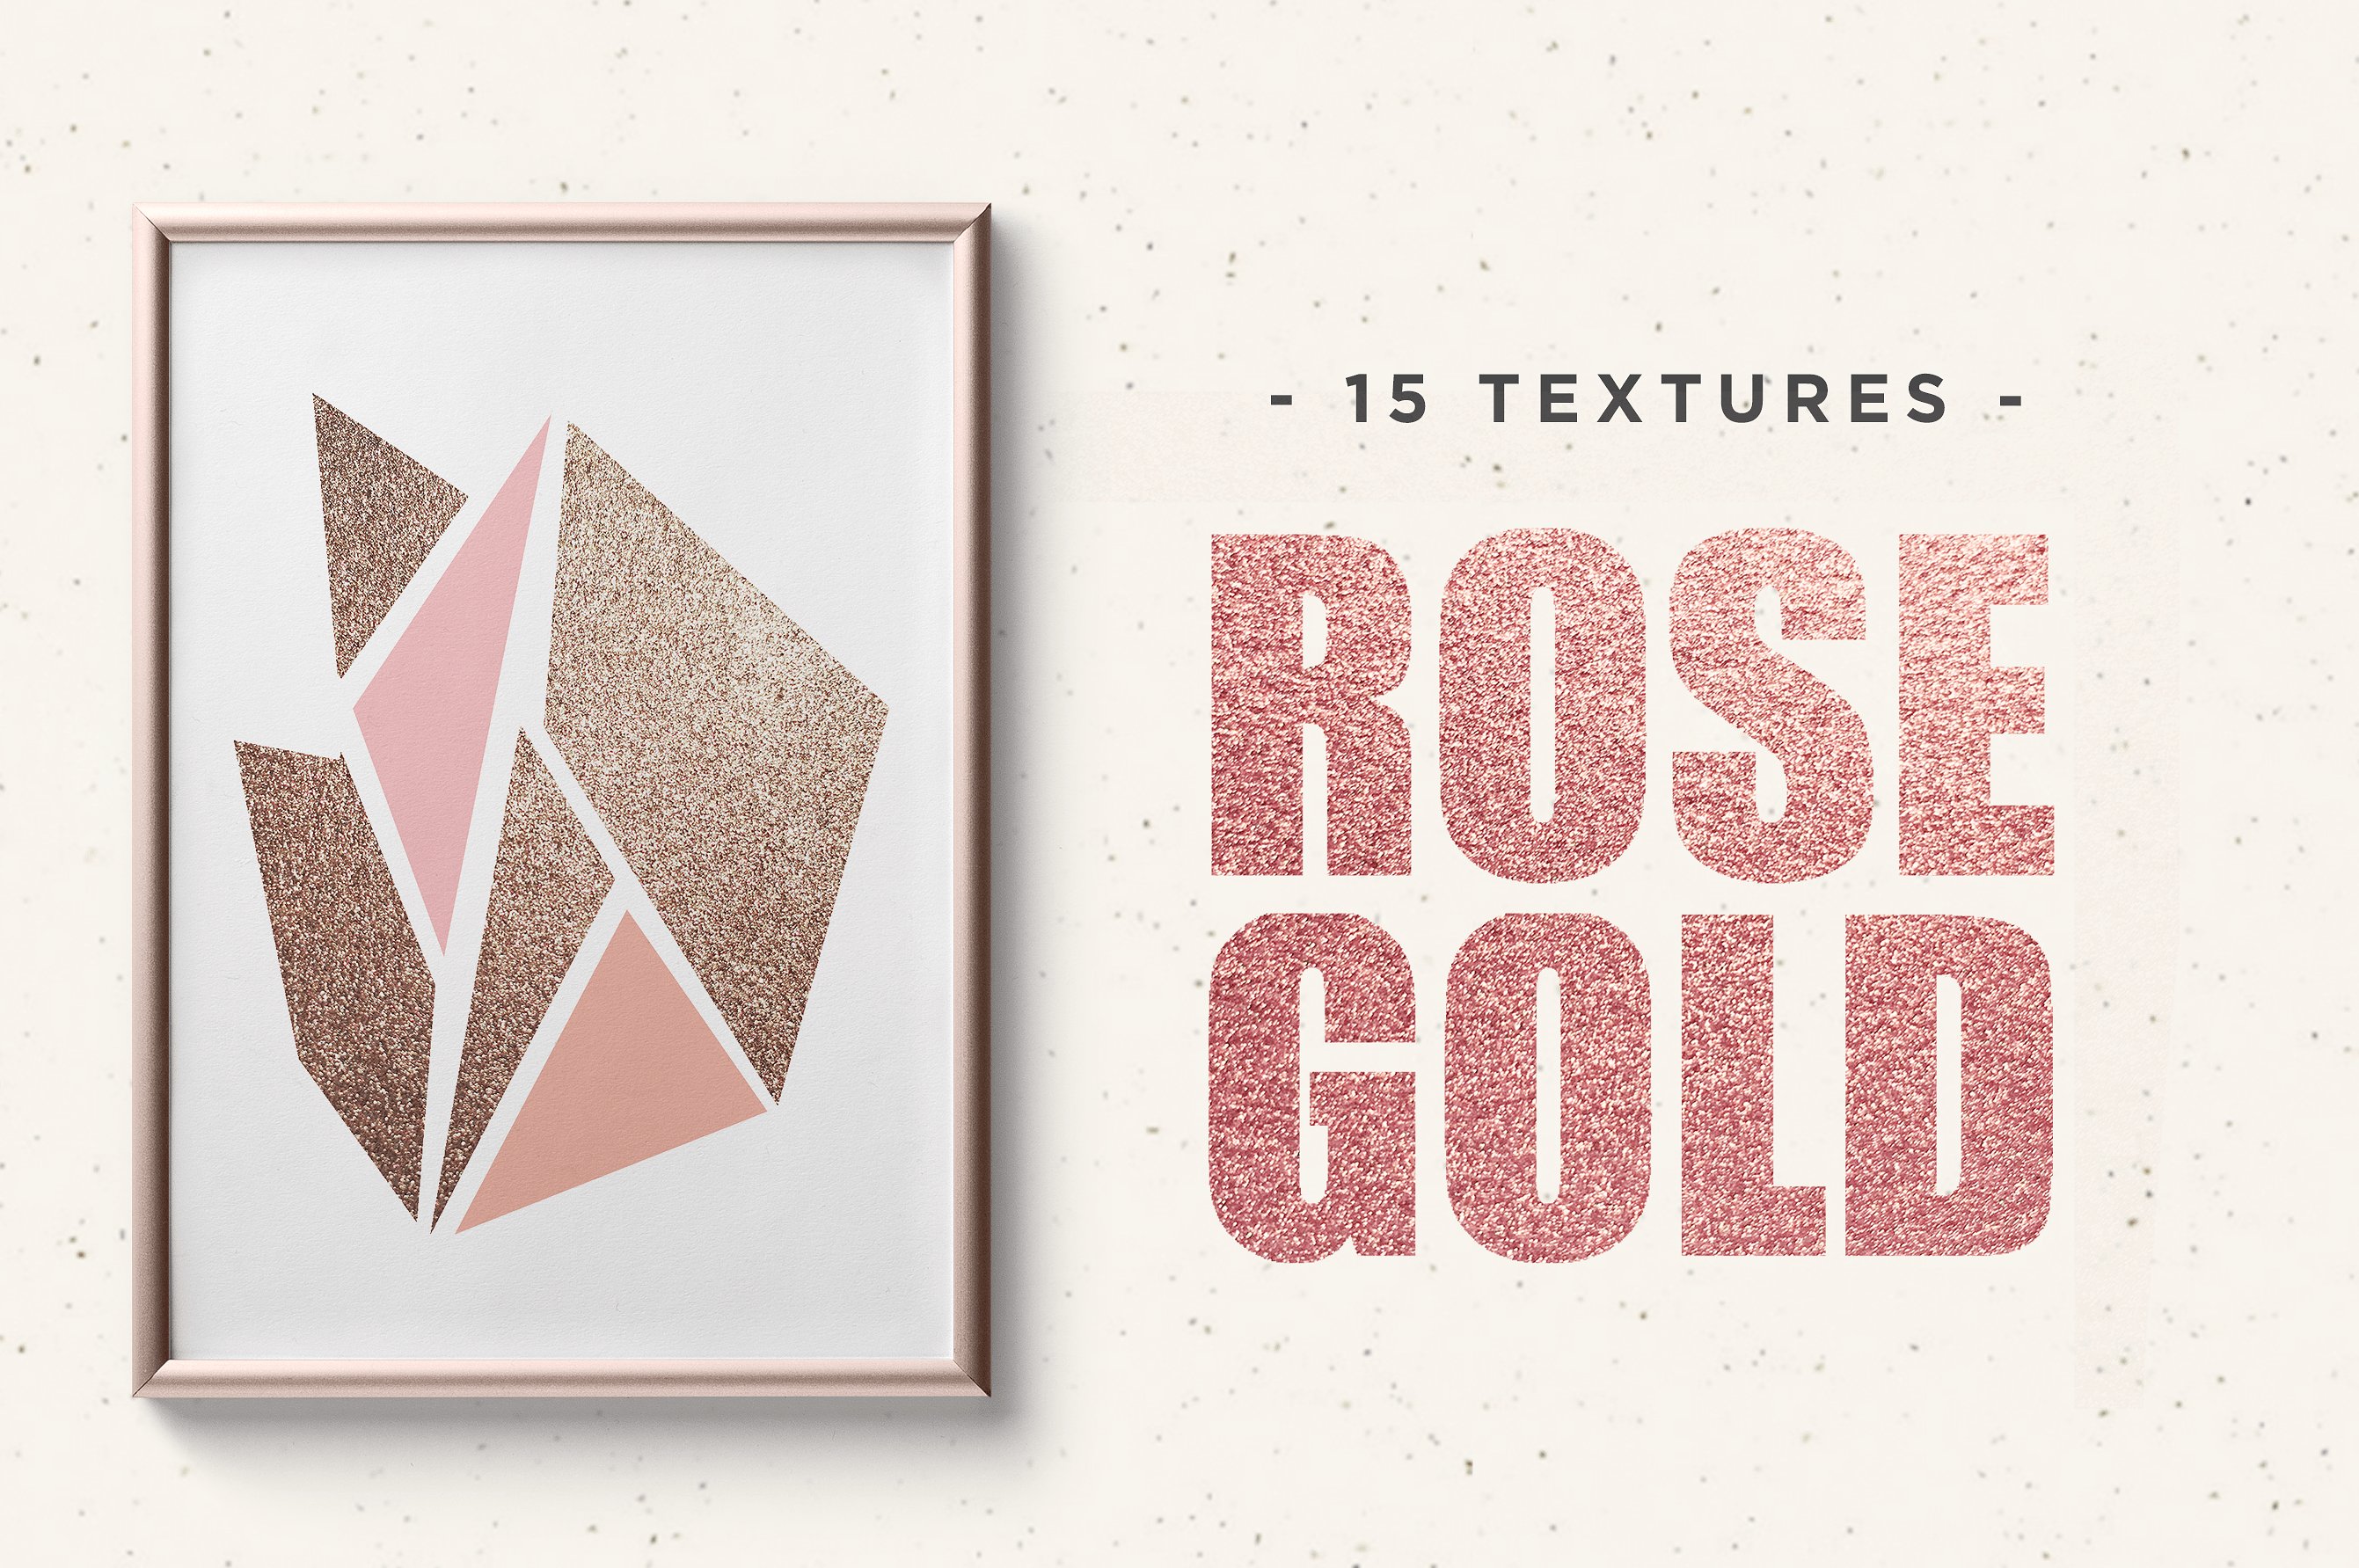 玫瑰金色素纸 Rose Gold Pigmented Paper插图